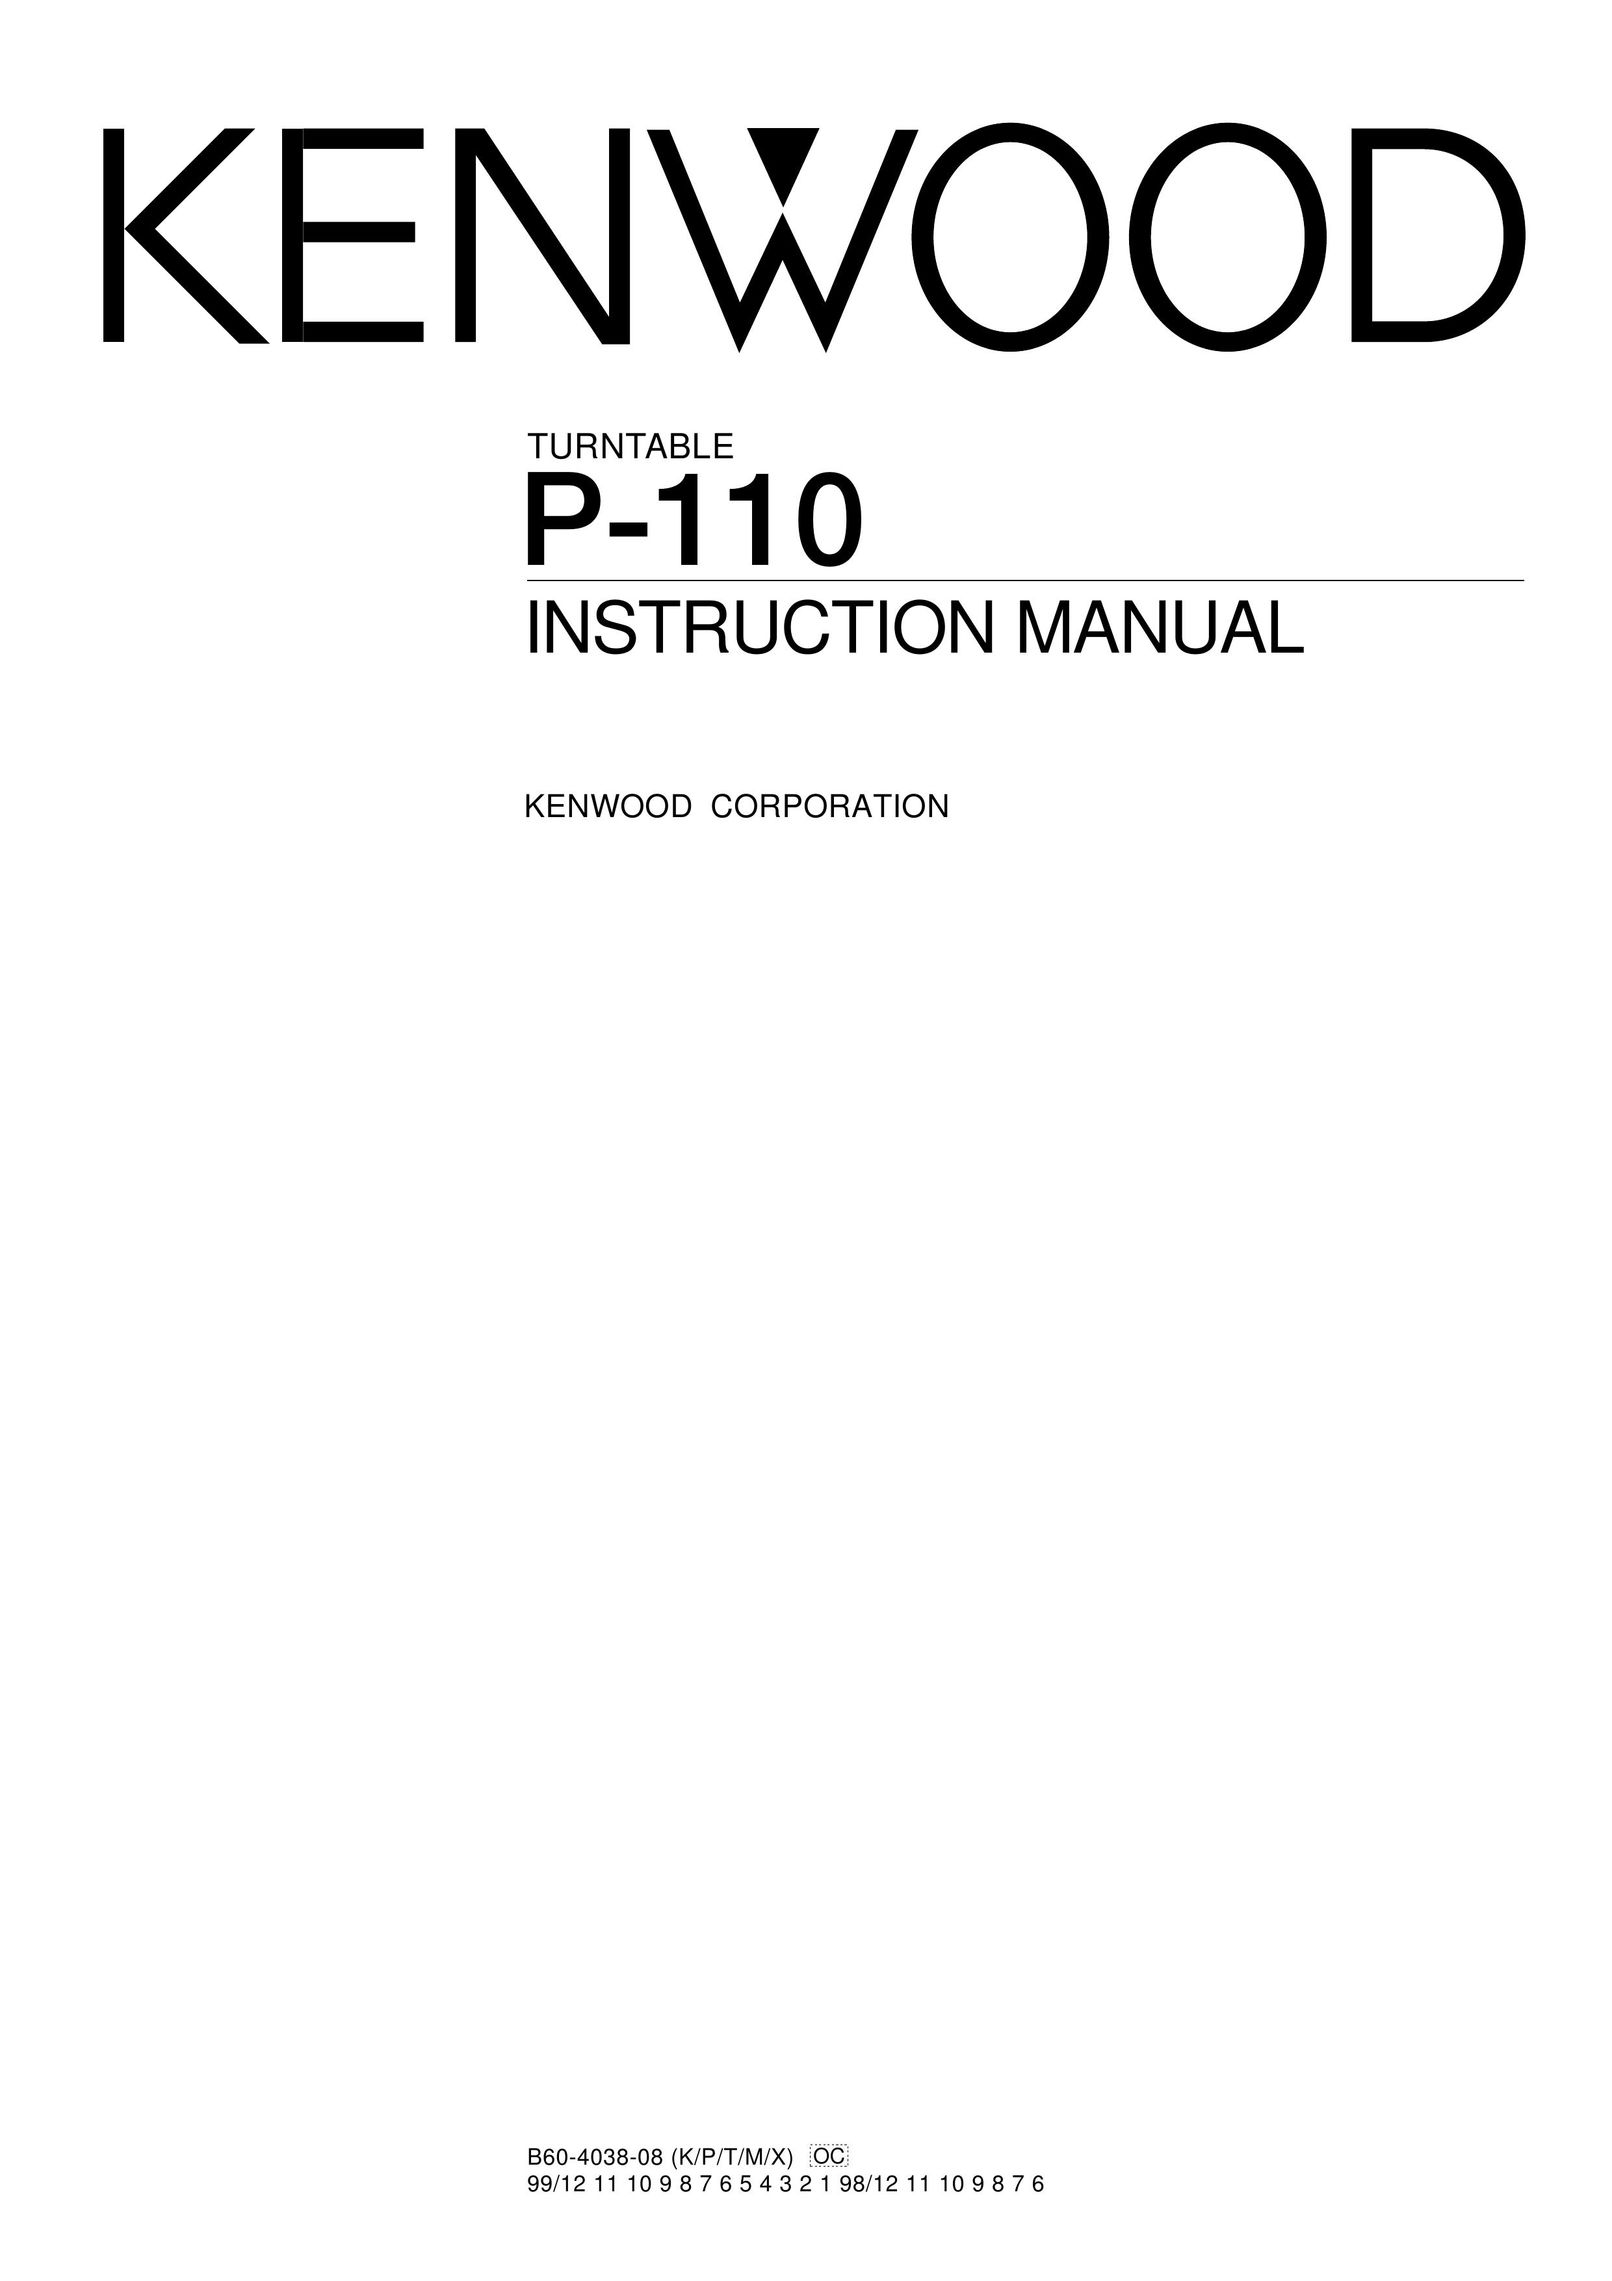 Kenwood P-110 Turntable User Manual